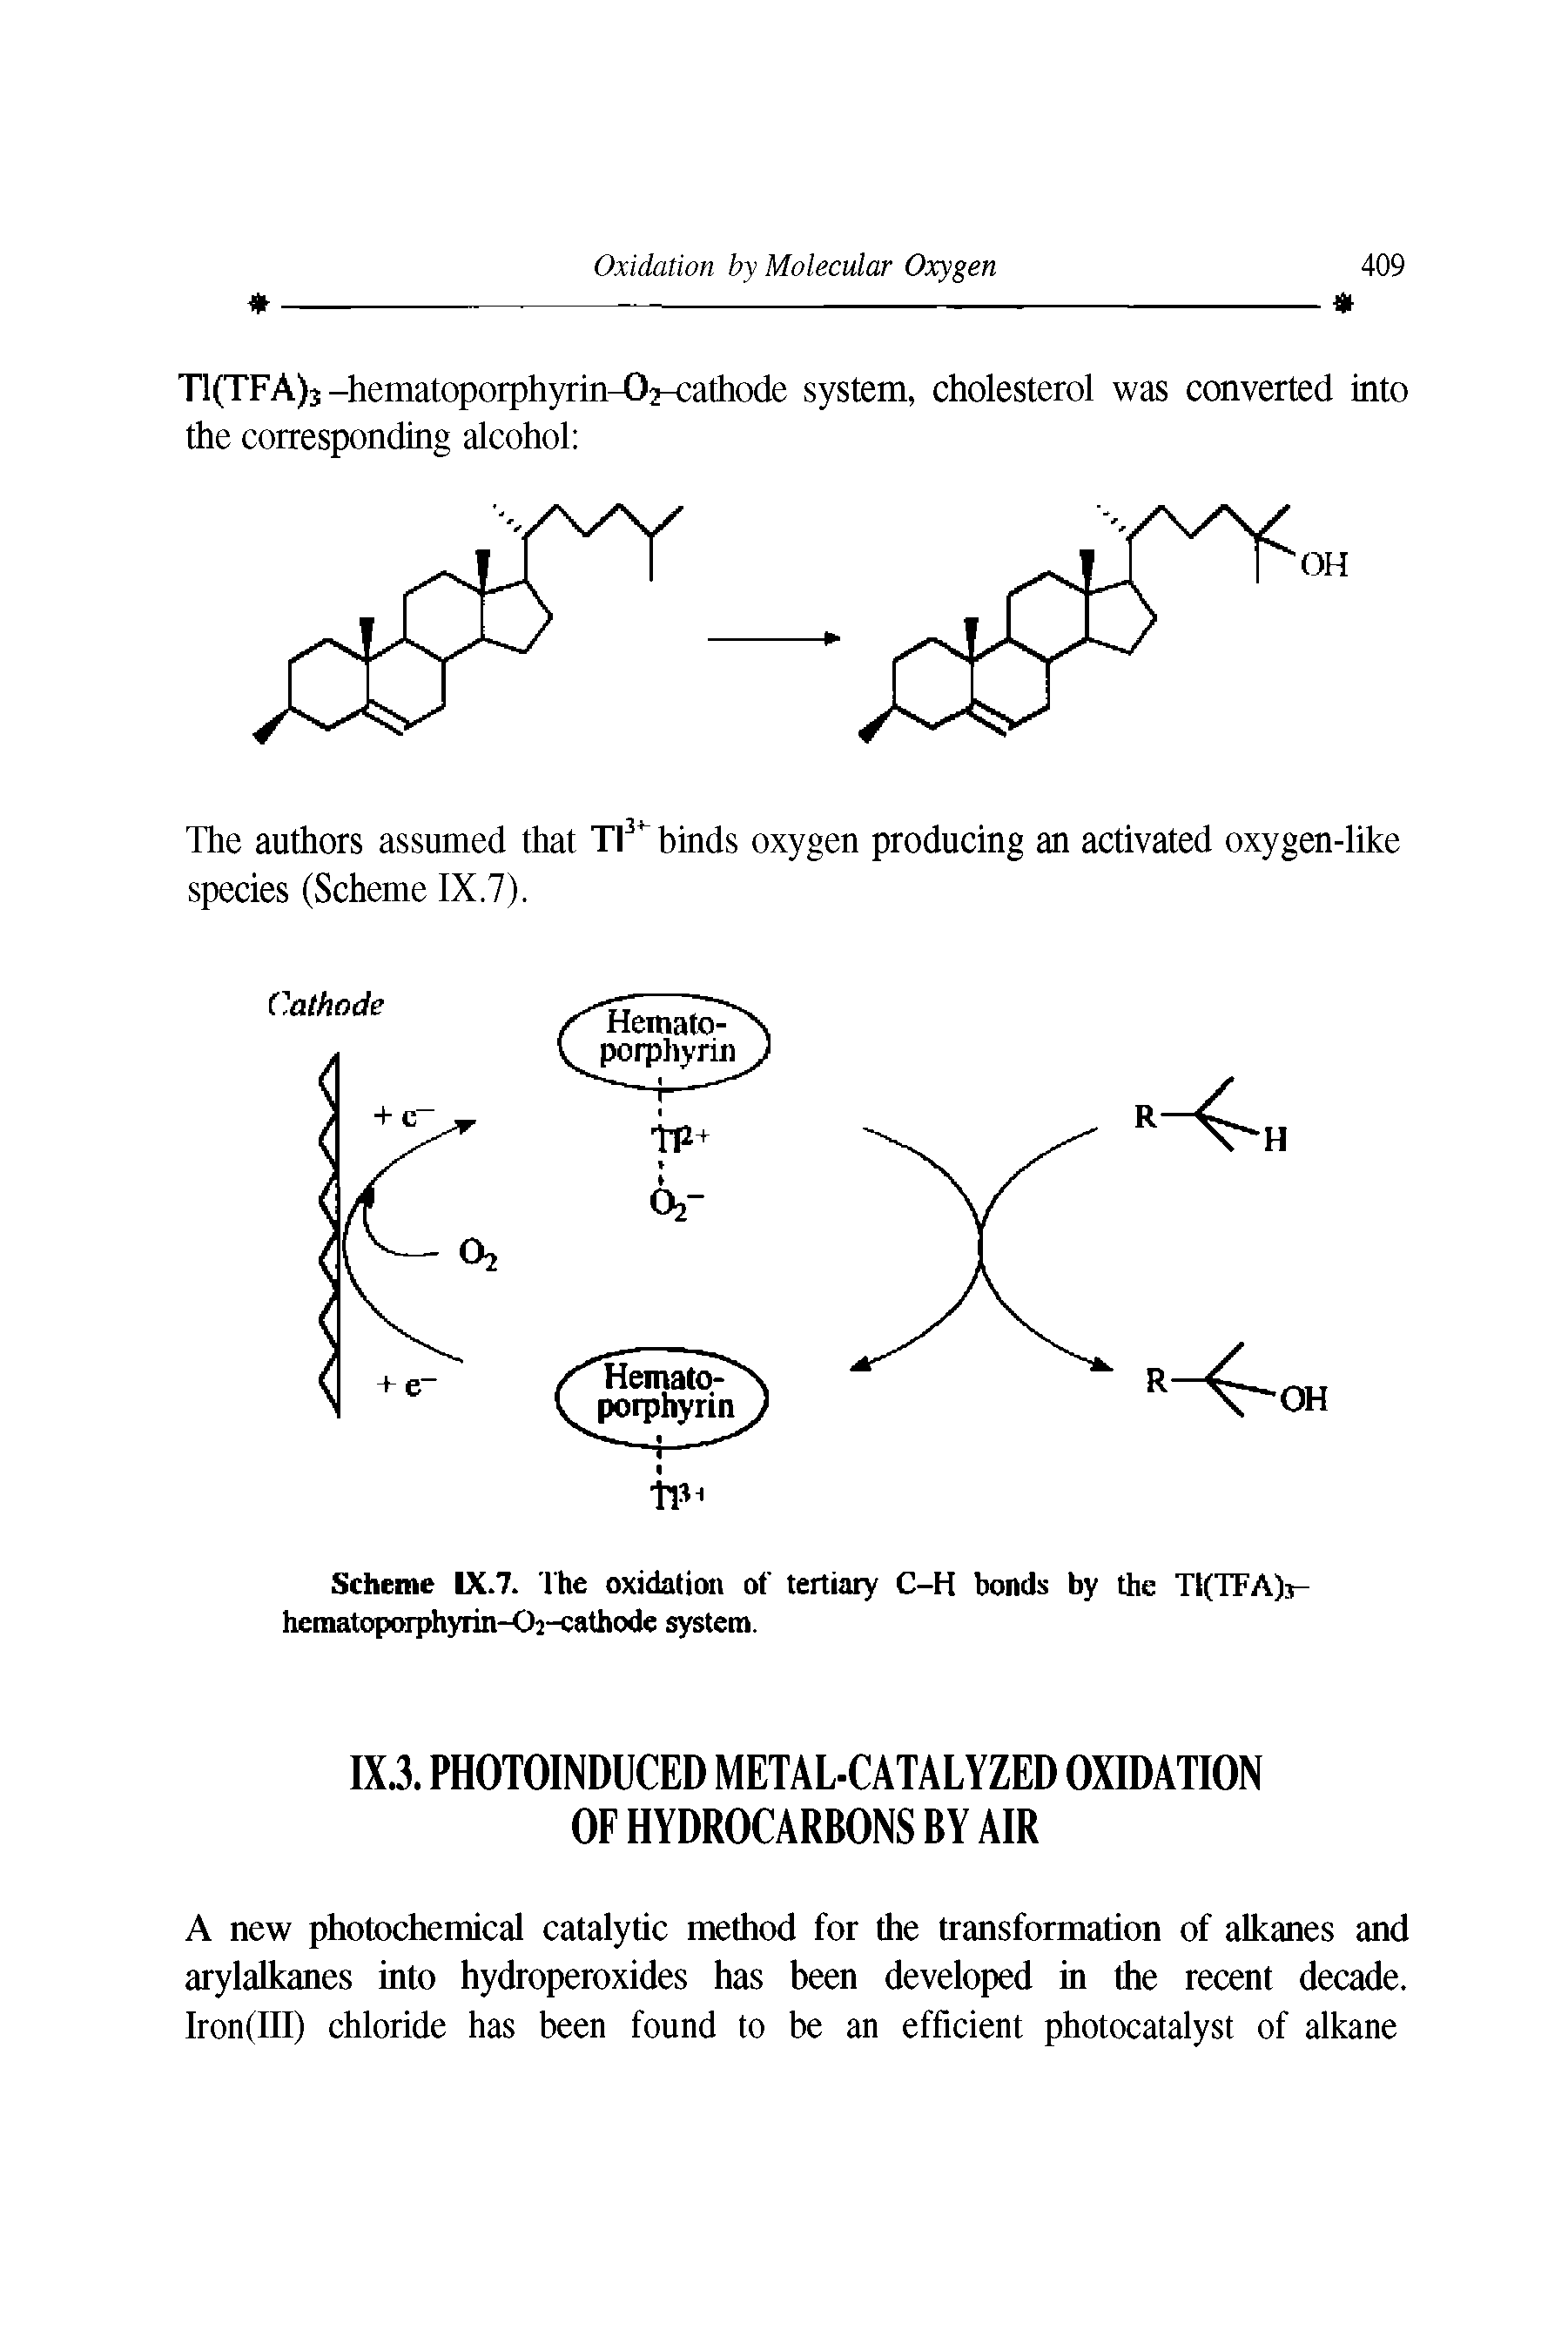 Scheme IX.7. The oxidation of tertiary C-H bonds by the Tl(TFA)j-hematoporphyrin-Oj-cathode system.